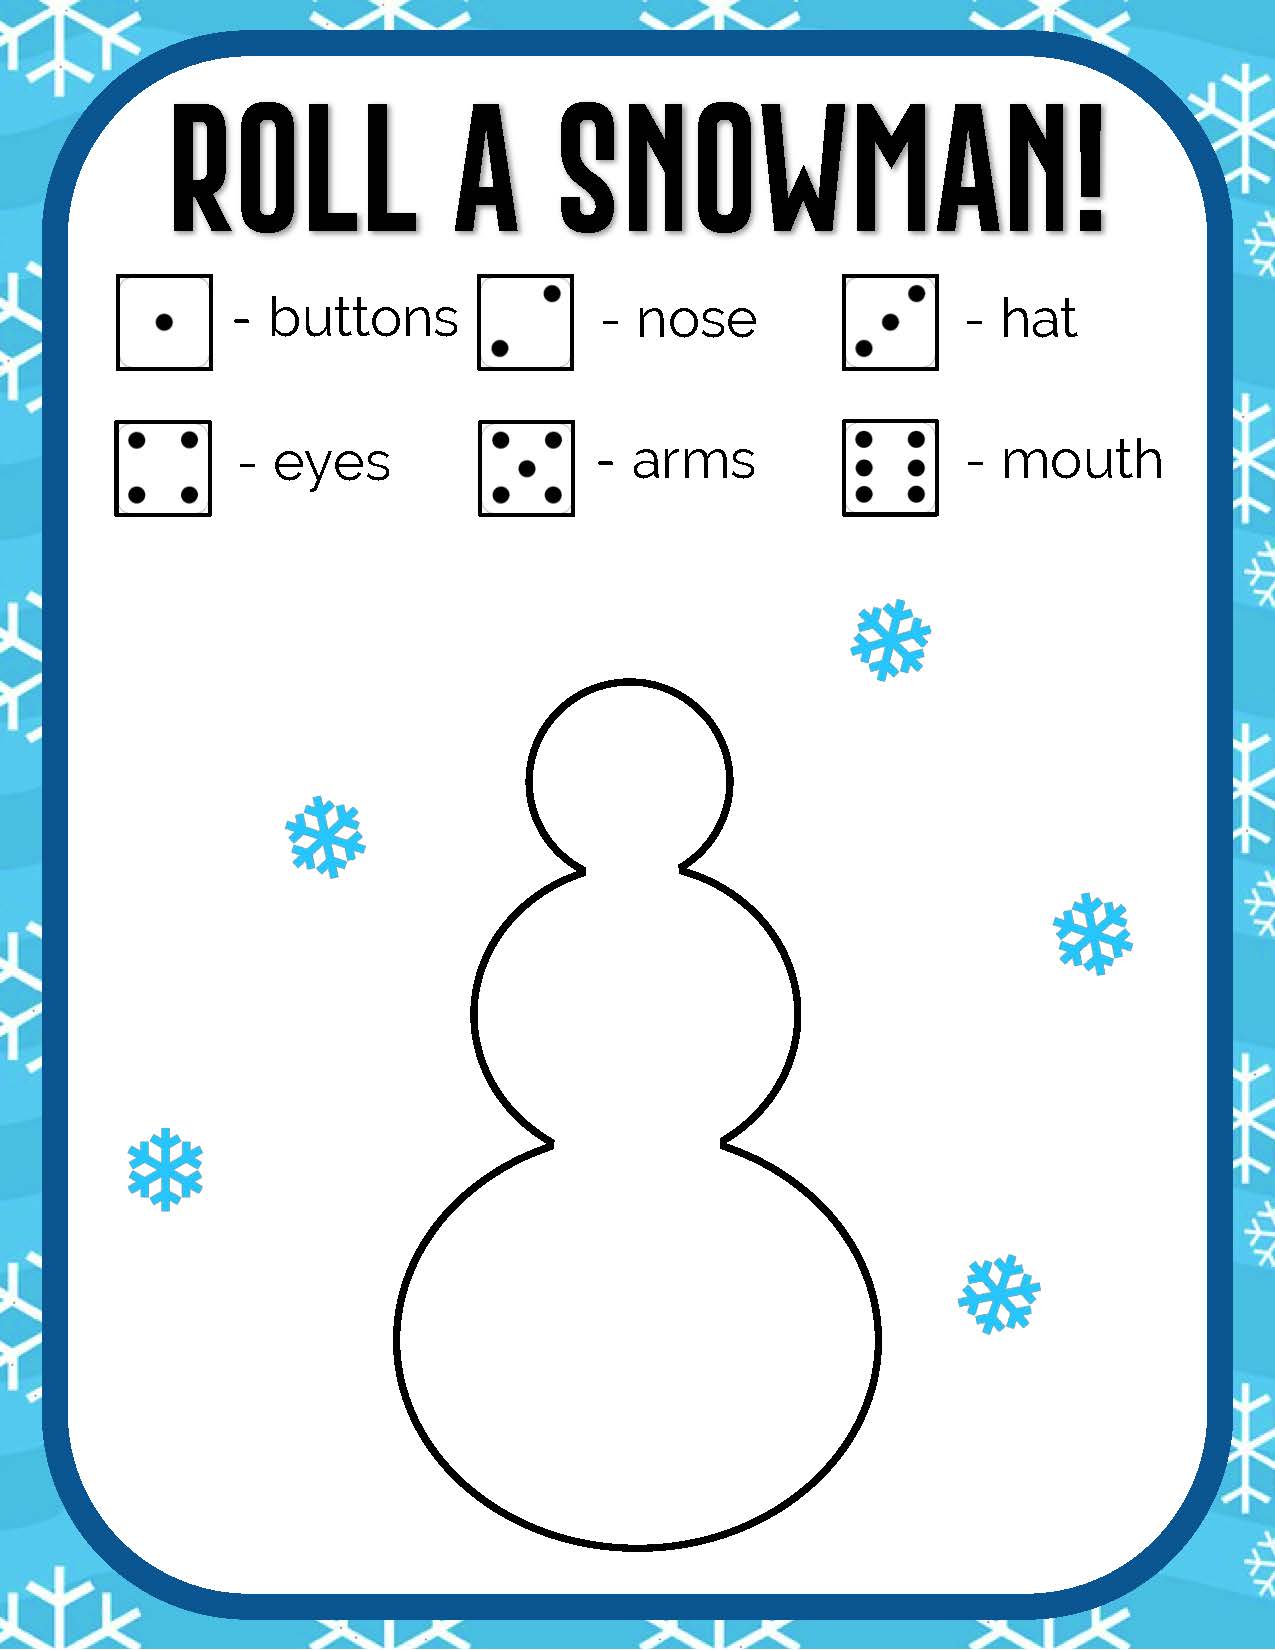 Roll A Snowman Dice Game Deeper KidMin